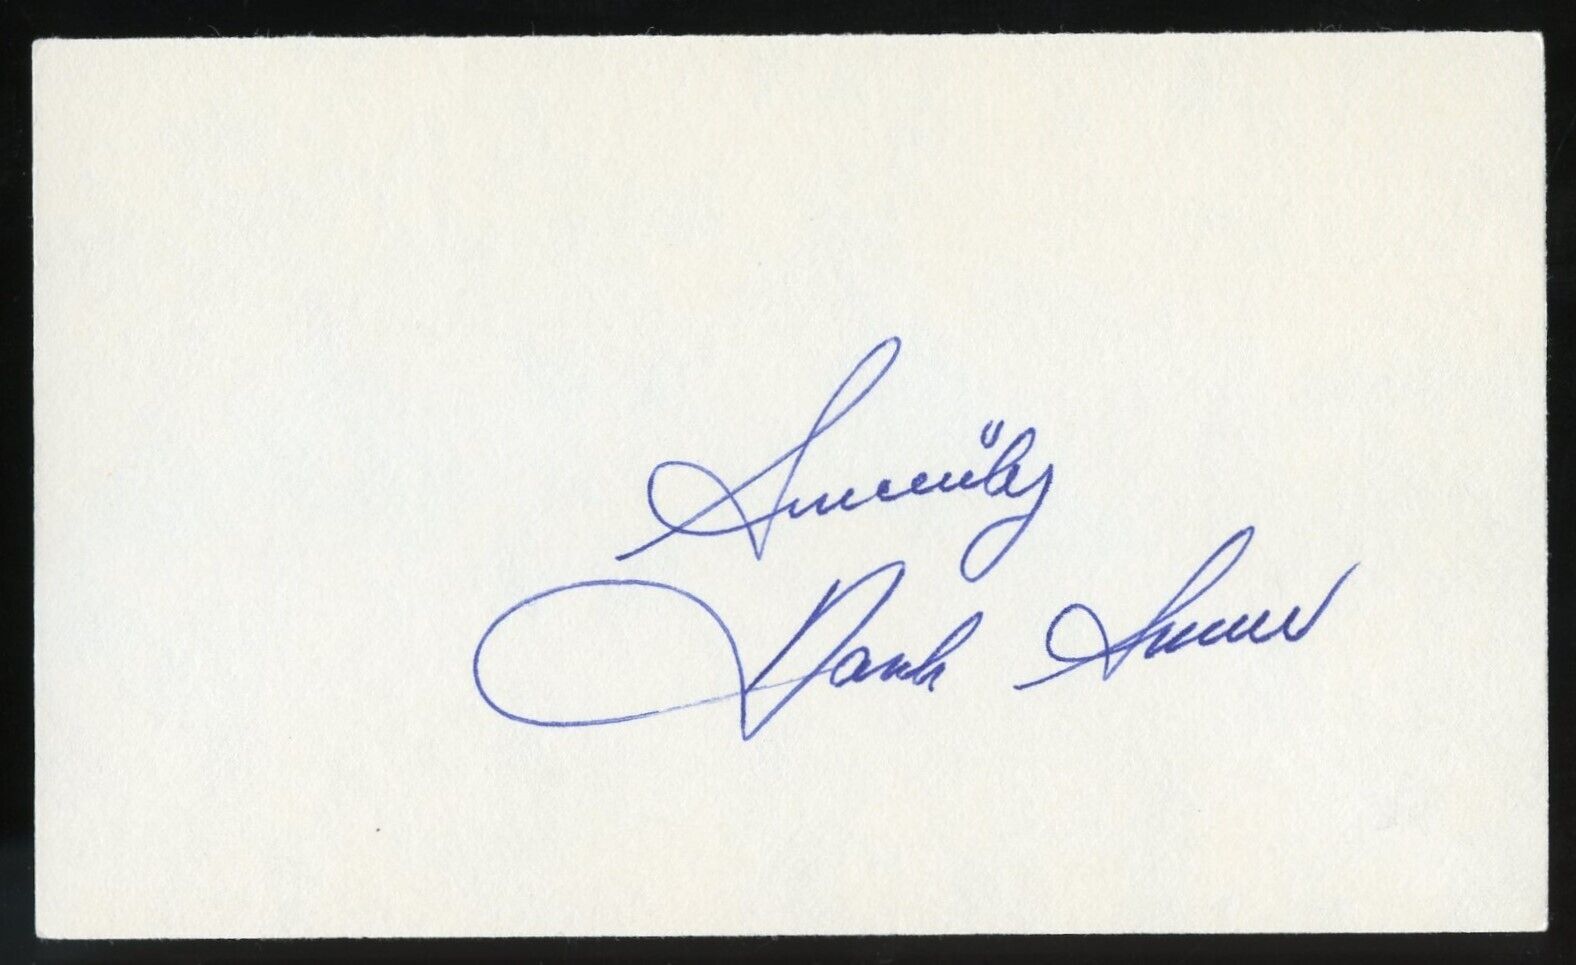 Hank Snow d1999 signed autograph 3x5 Cut American Country Music Guitarist Singer